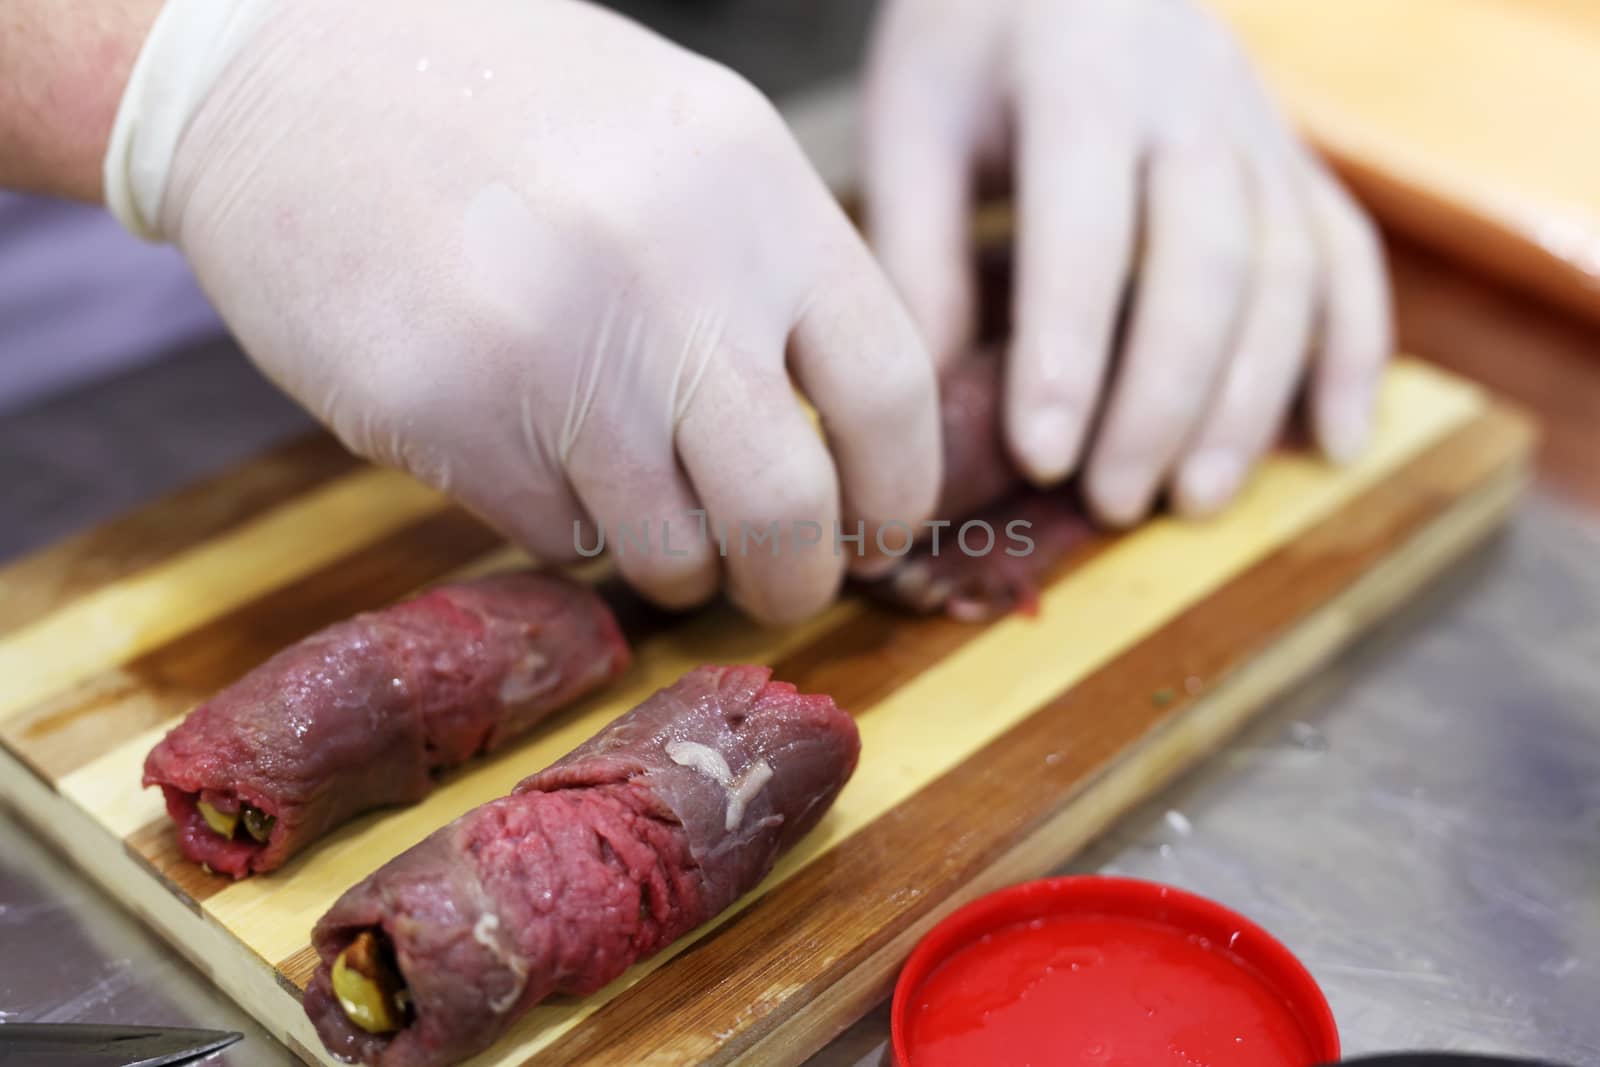 Preparation of meat rolls by shamtor